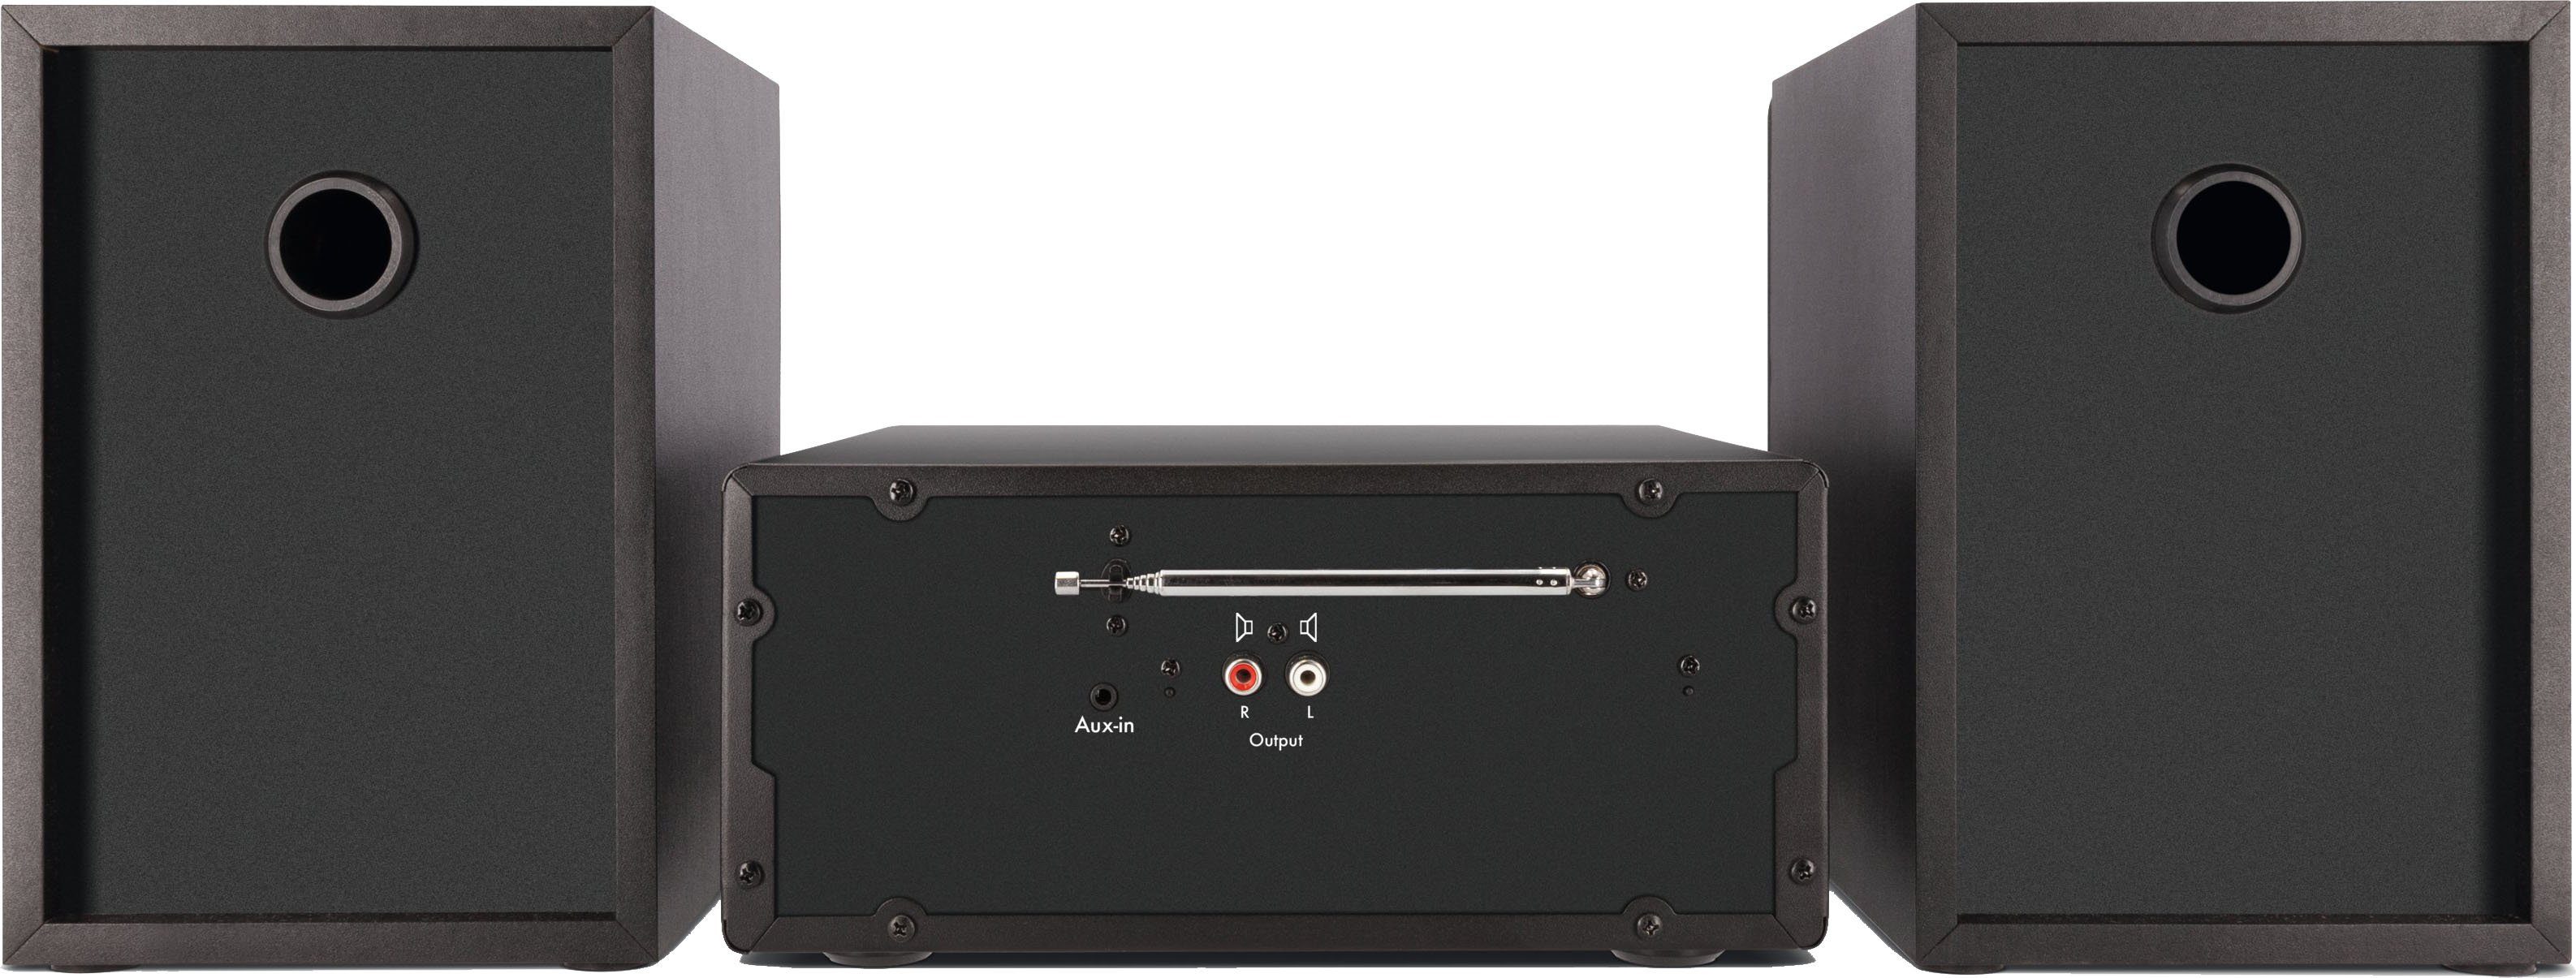 Microanlage Internetradio, TechniSat (Digitalradio (DAB), UKW Stereo- DIGITRADIO 700 40 W) mit RDS,